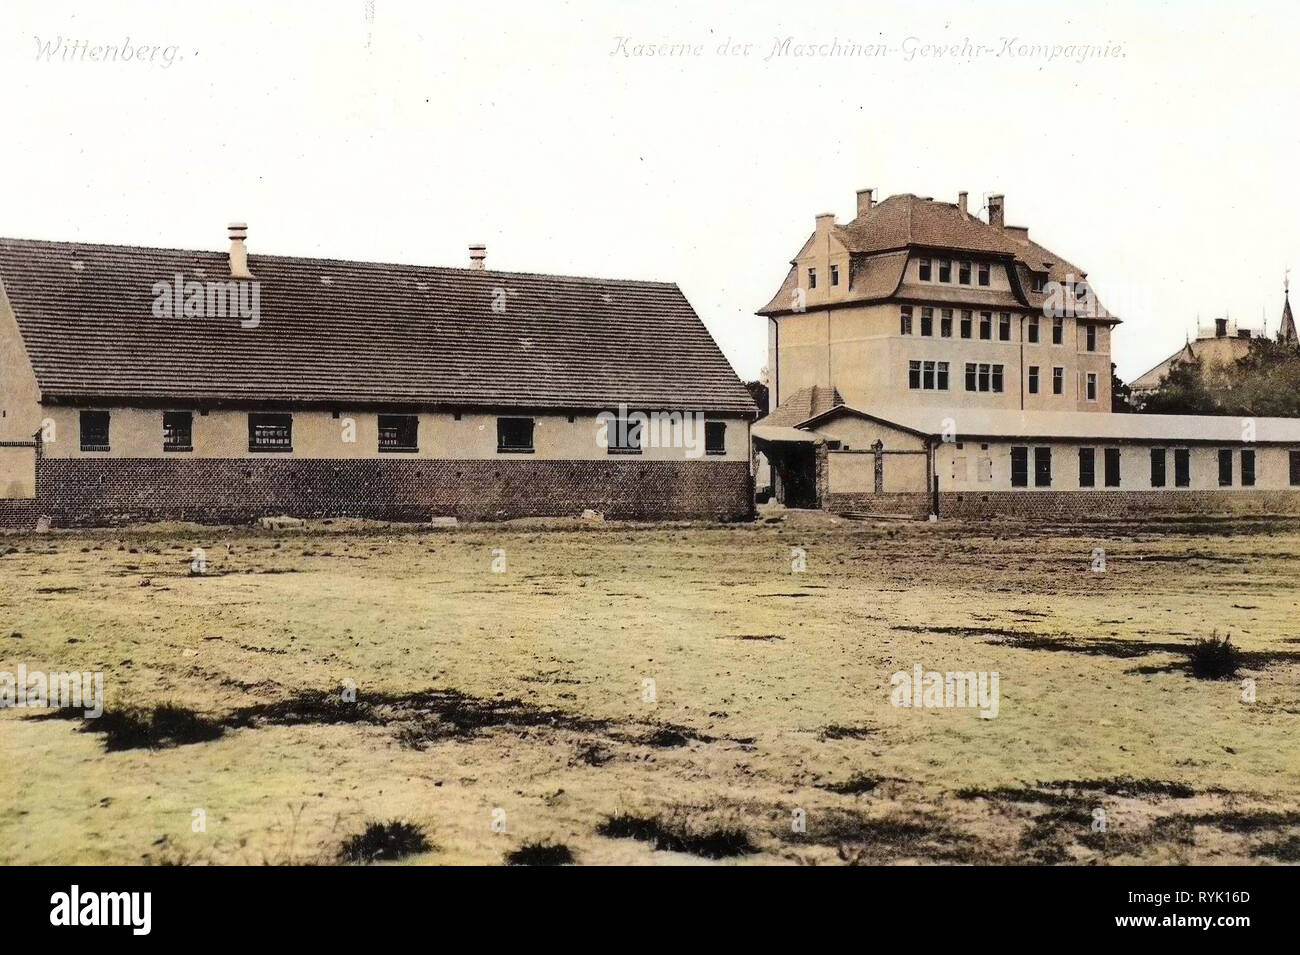 Military facilities of Germany, Buildings in Wittenberg, Barracks in Saxony-Anhalt, 1913, Saxony-Anhalt, Wittenberg, Kaserne der Maschinen, Gewehr, Kompanie Stock Photo